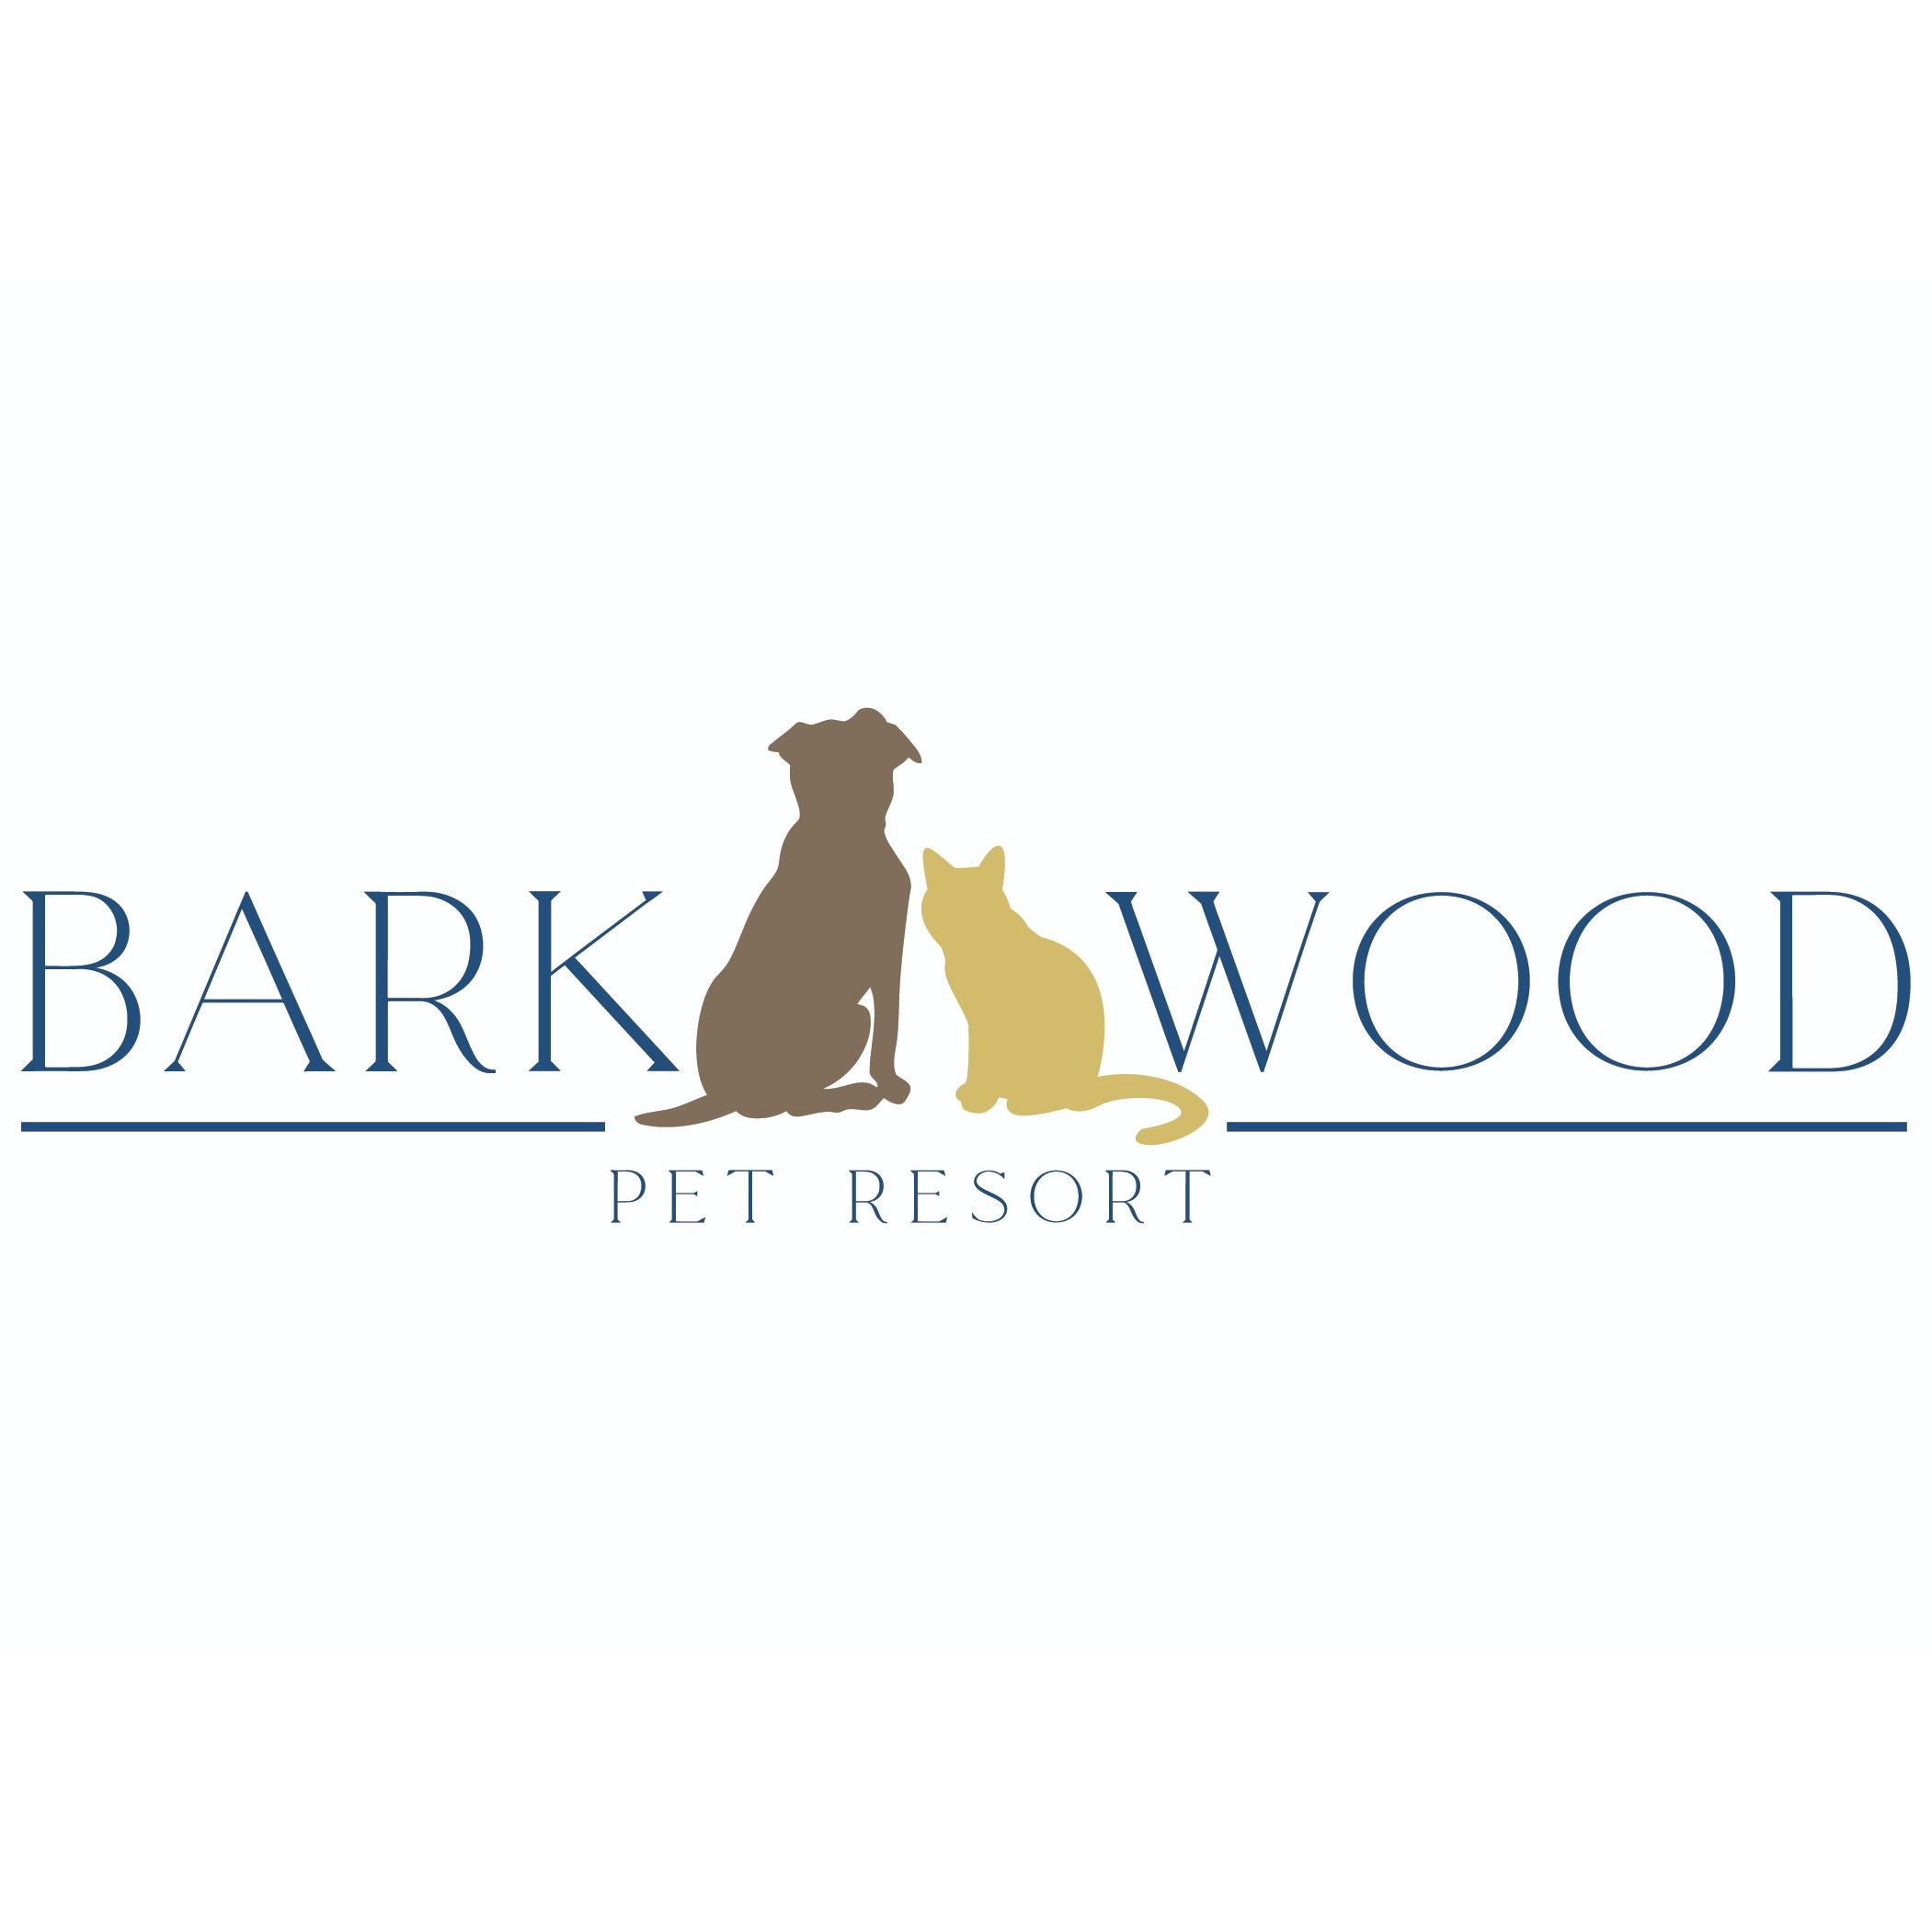 Barkwood Pet Resort